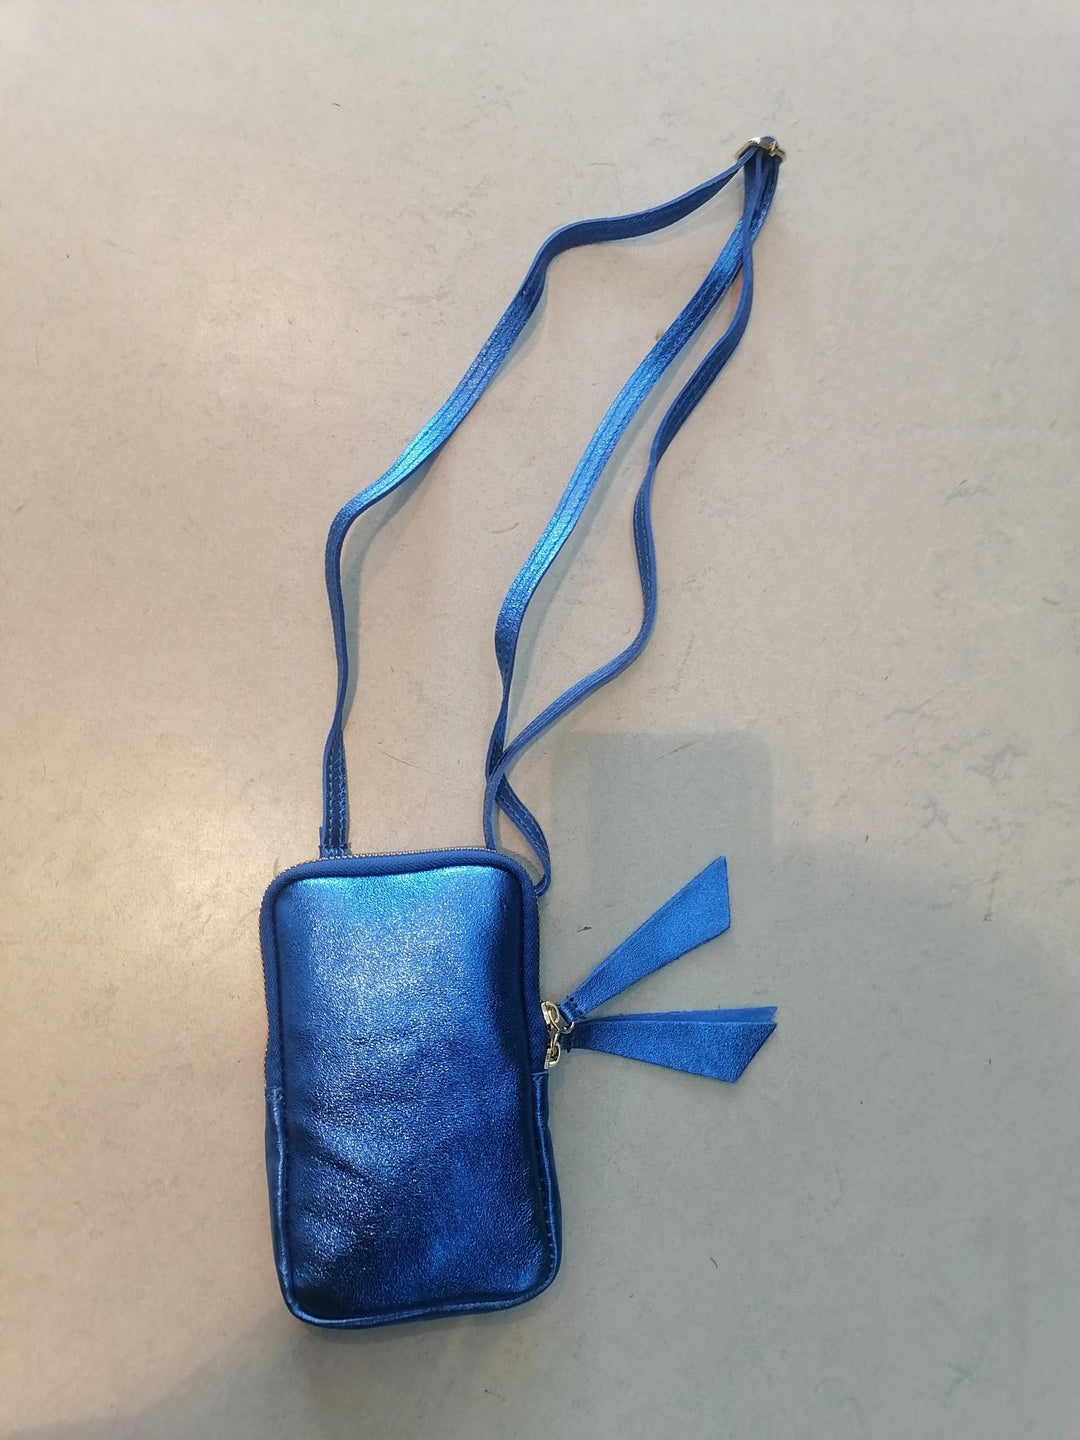 Mini blauwe metallic crossbody tas van leder-axent-ITA003-shiny-blauw